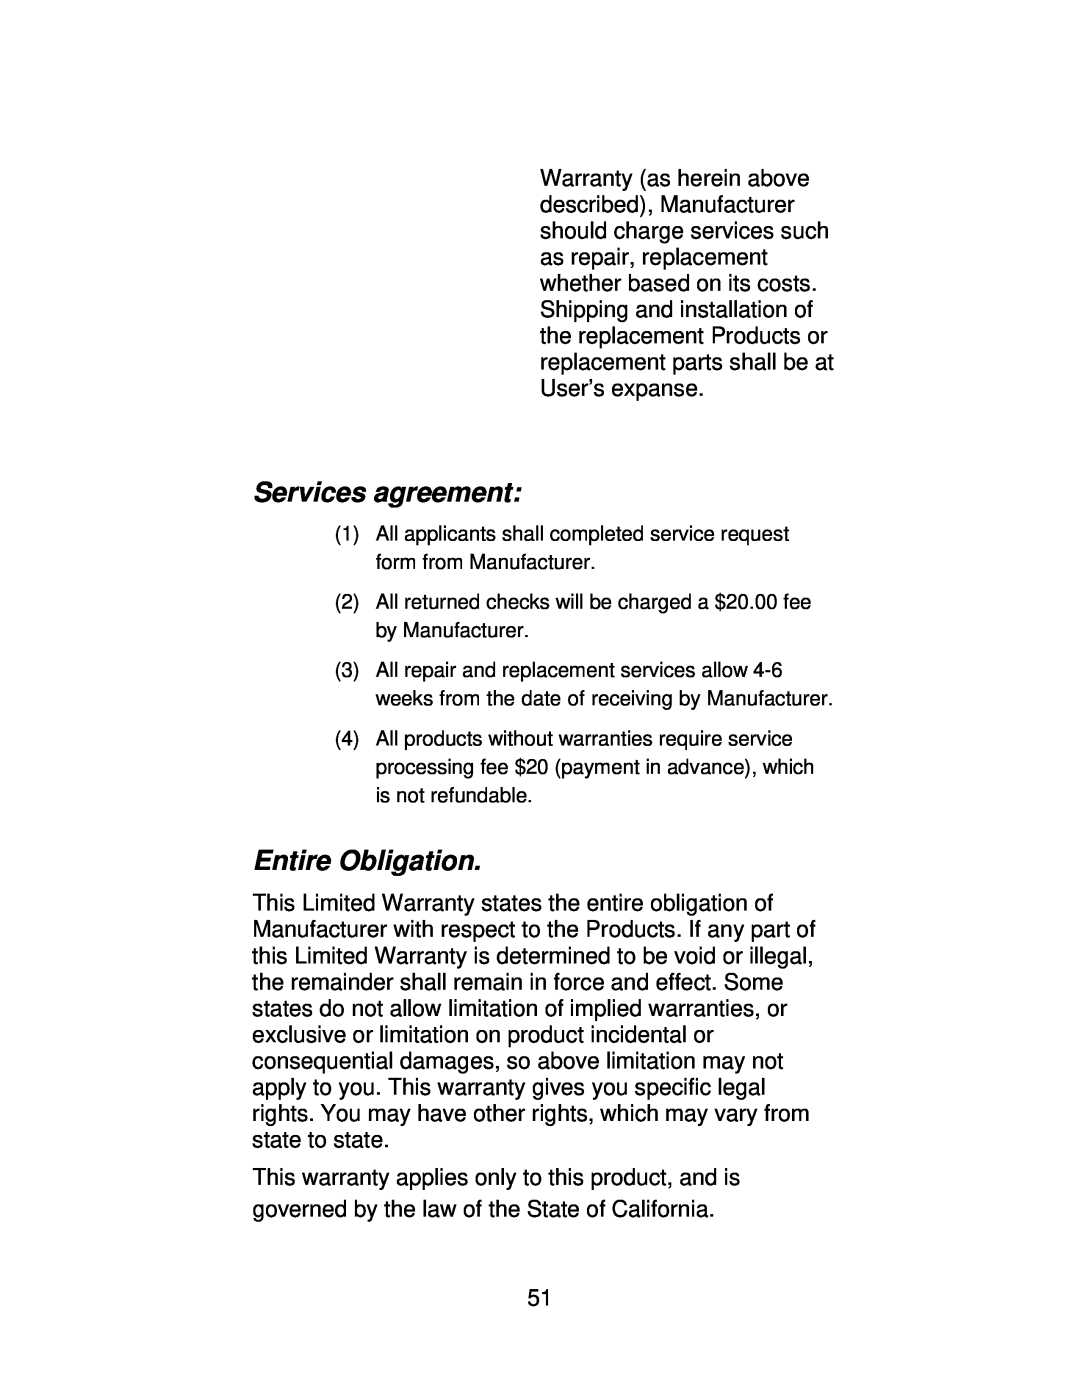 Jaton 5200 user manual Services agreement, Entire Obligation 